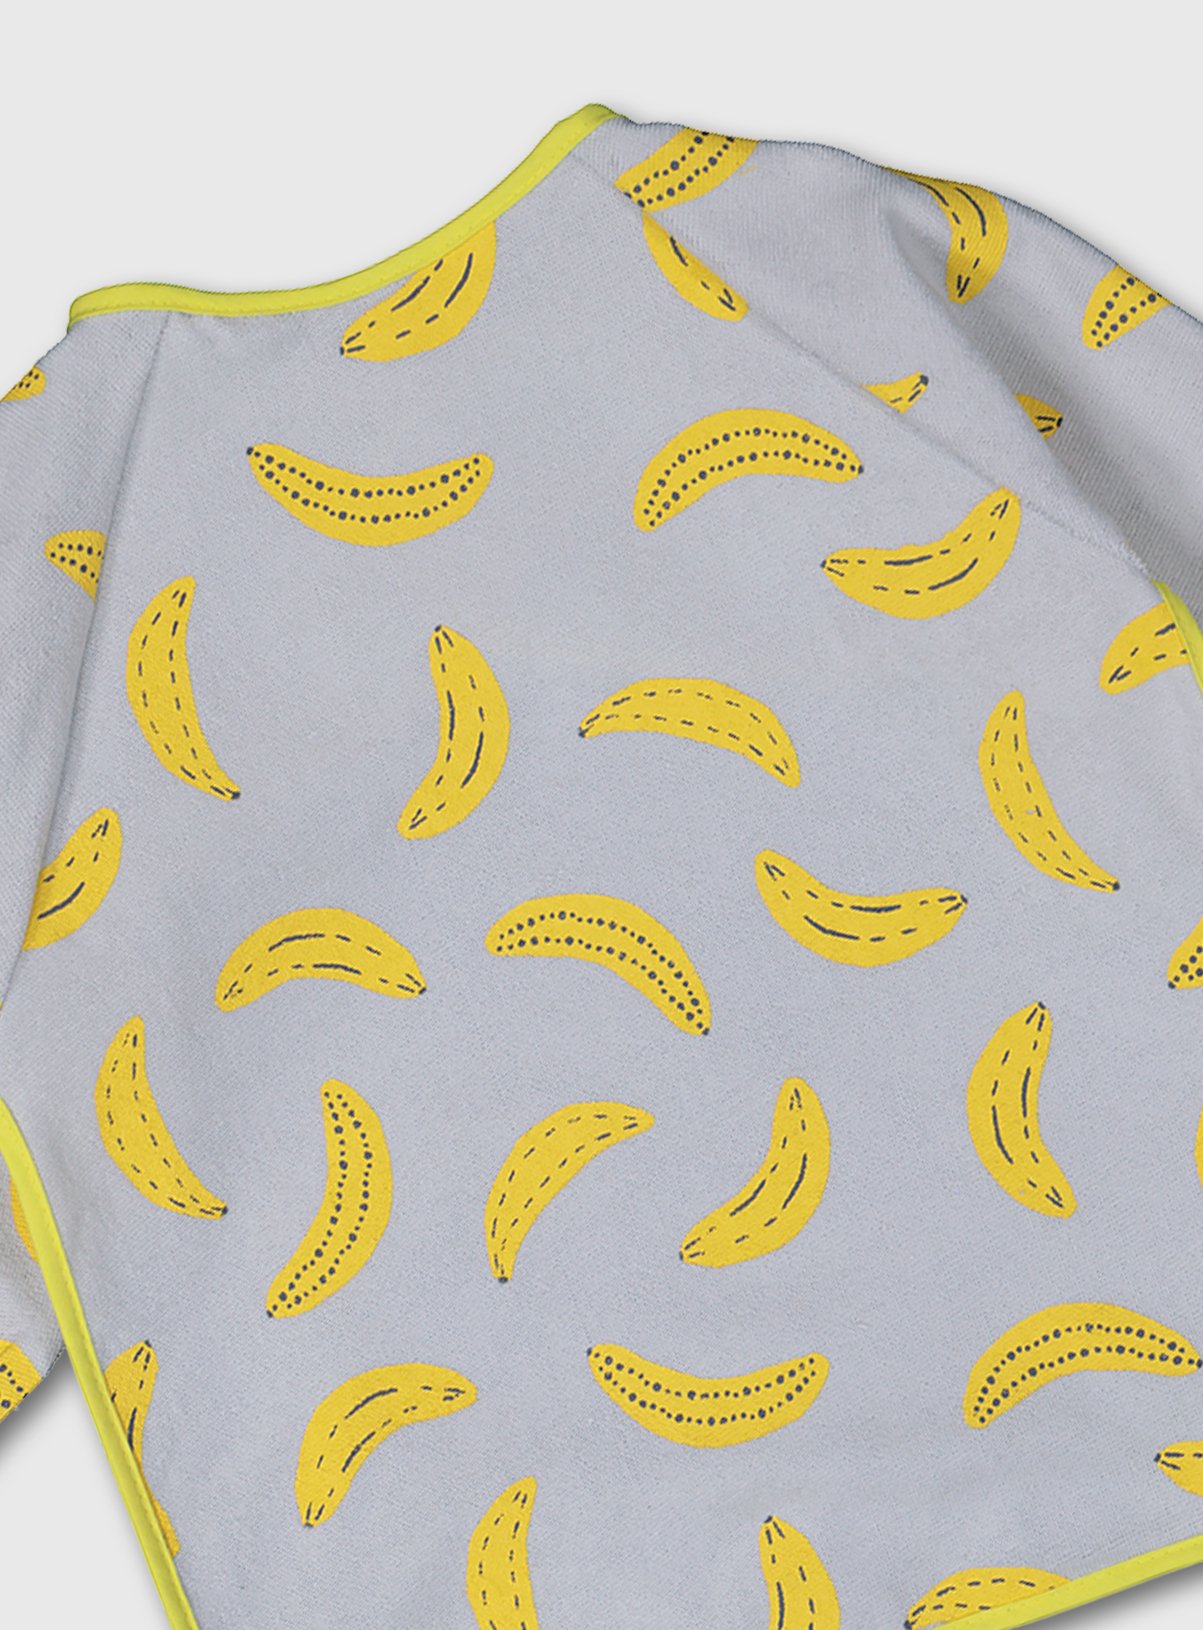 Yellow Banana Long Sleeve Bib Review